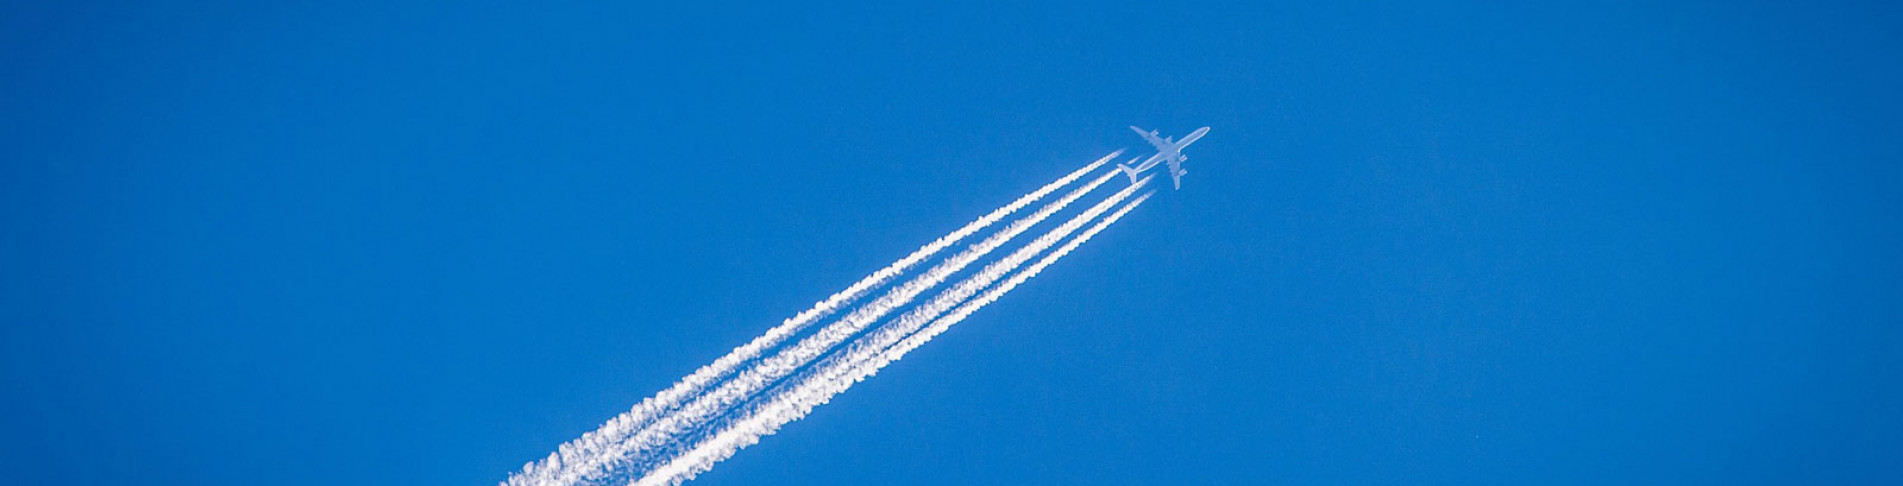 Flugzeug im Himmel auf dem Weg nach Bulgarien